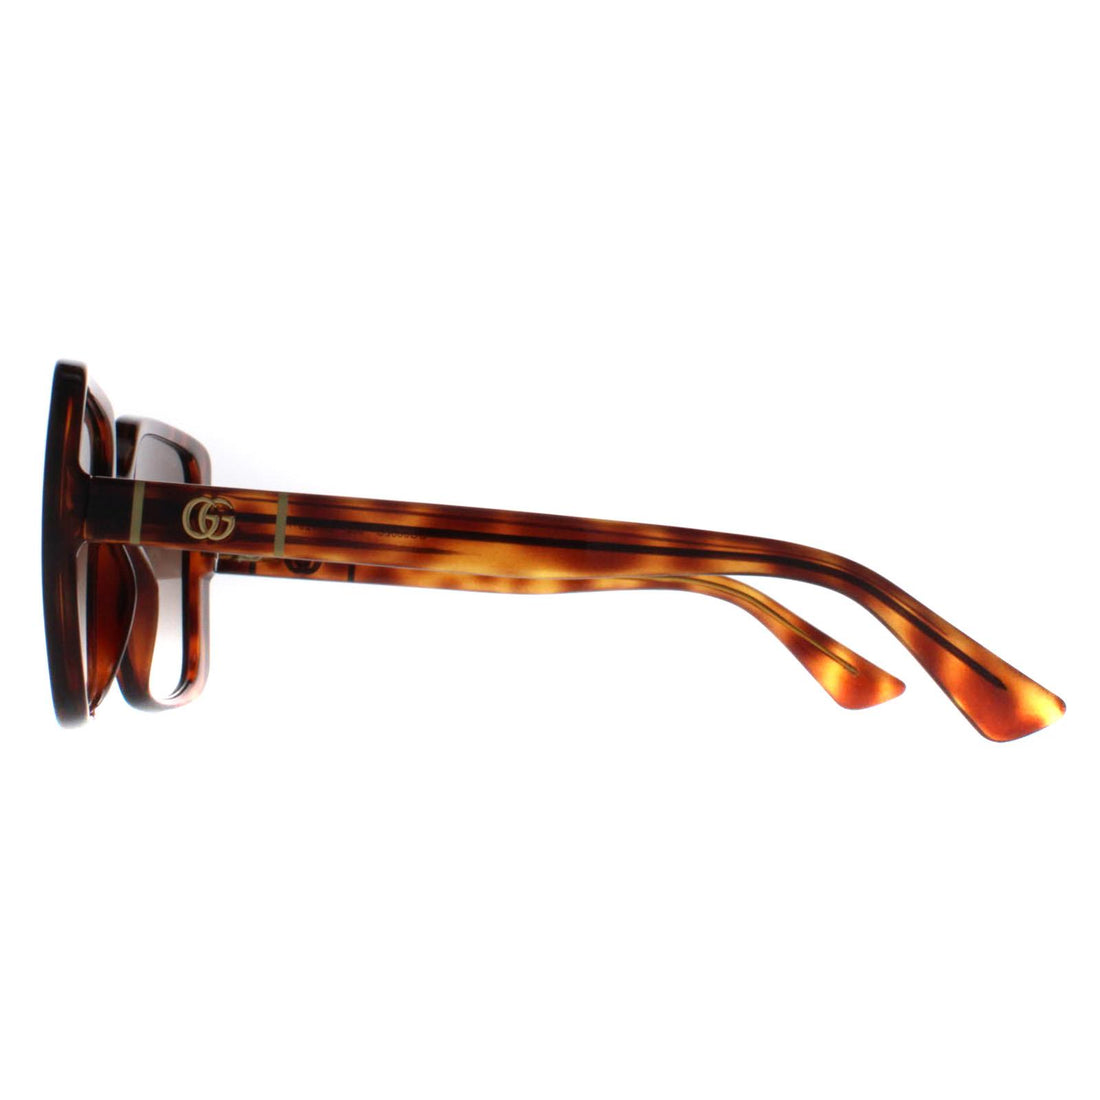 Gucci Sunglasses GG0632S 002 Dark Havana Brown Gradient